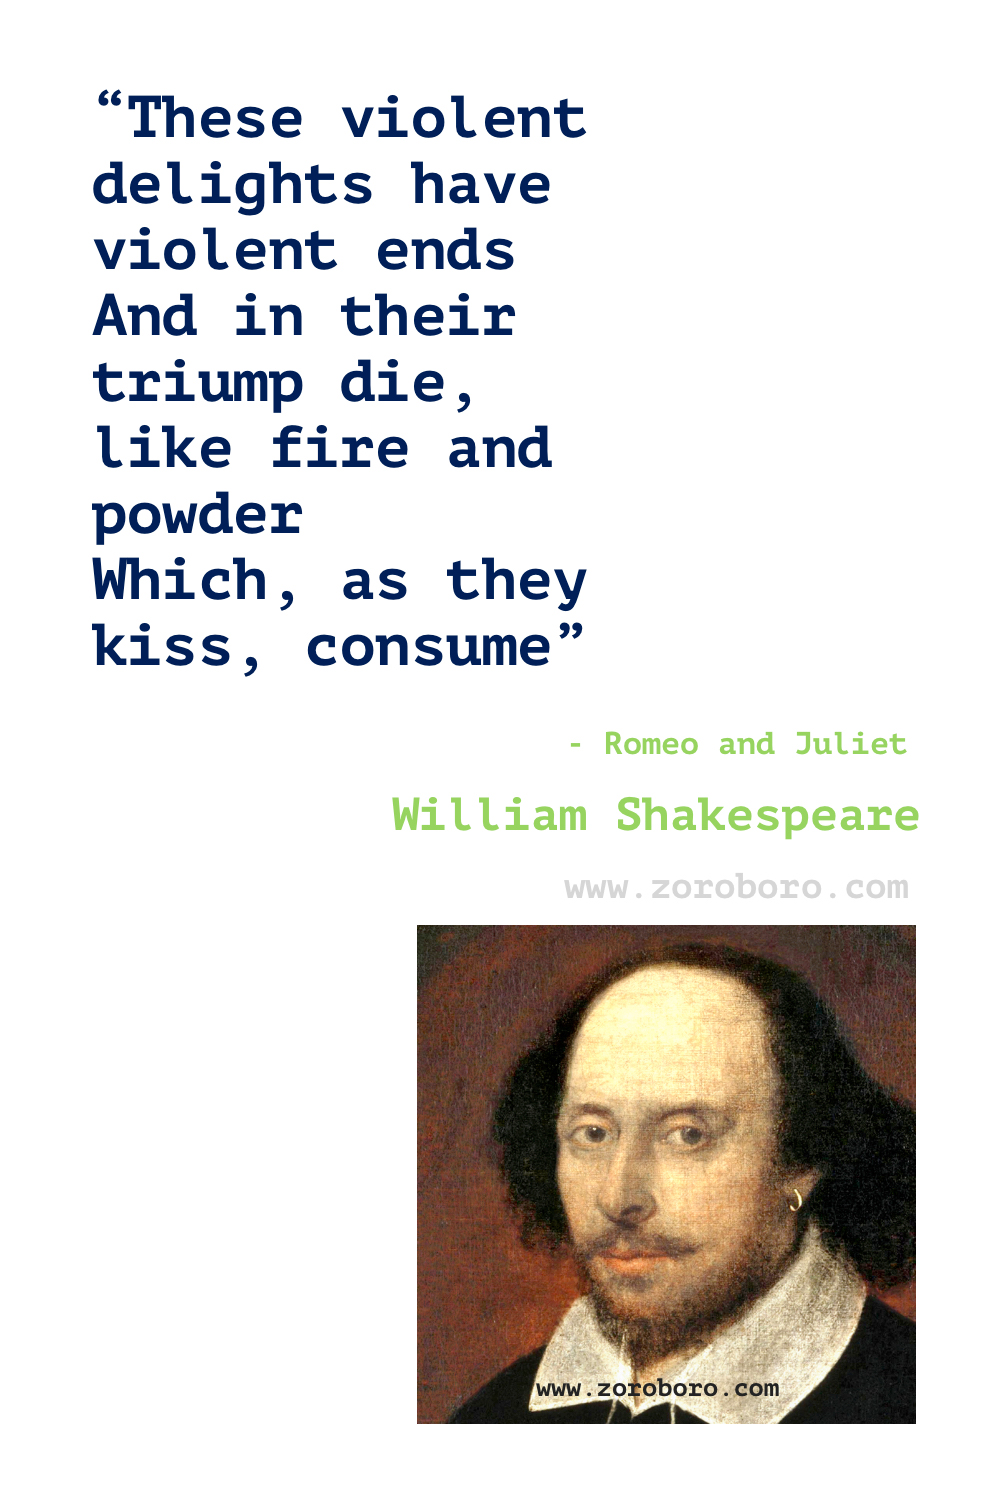 William Shakespeare Quotes, Romeo and Juliet Quotes, Hamlet Quotes, Macbeth Quotes & more. William Shakespeare Play Quotes, William Shakespeare Poems.